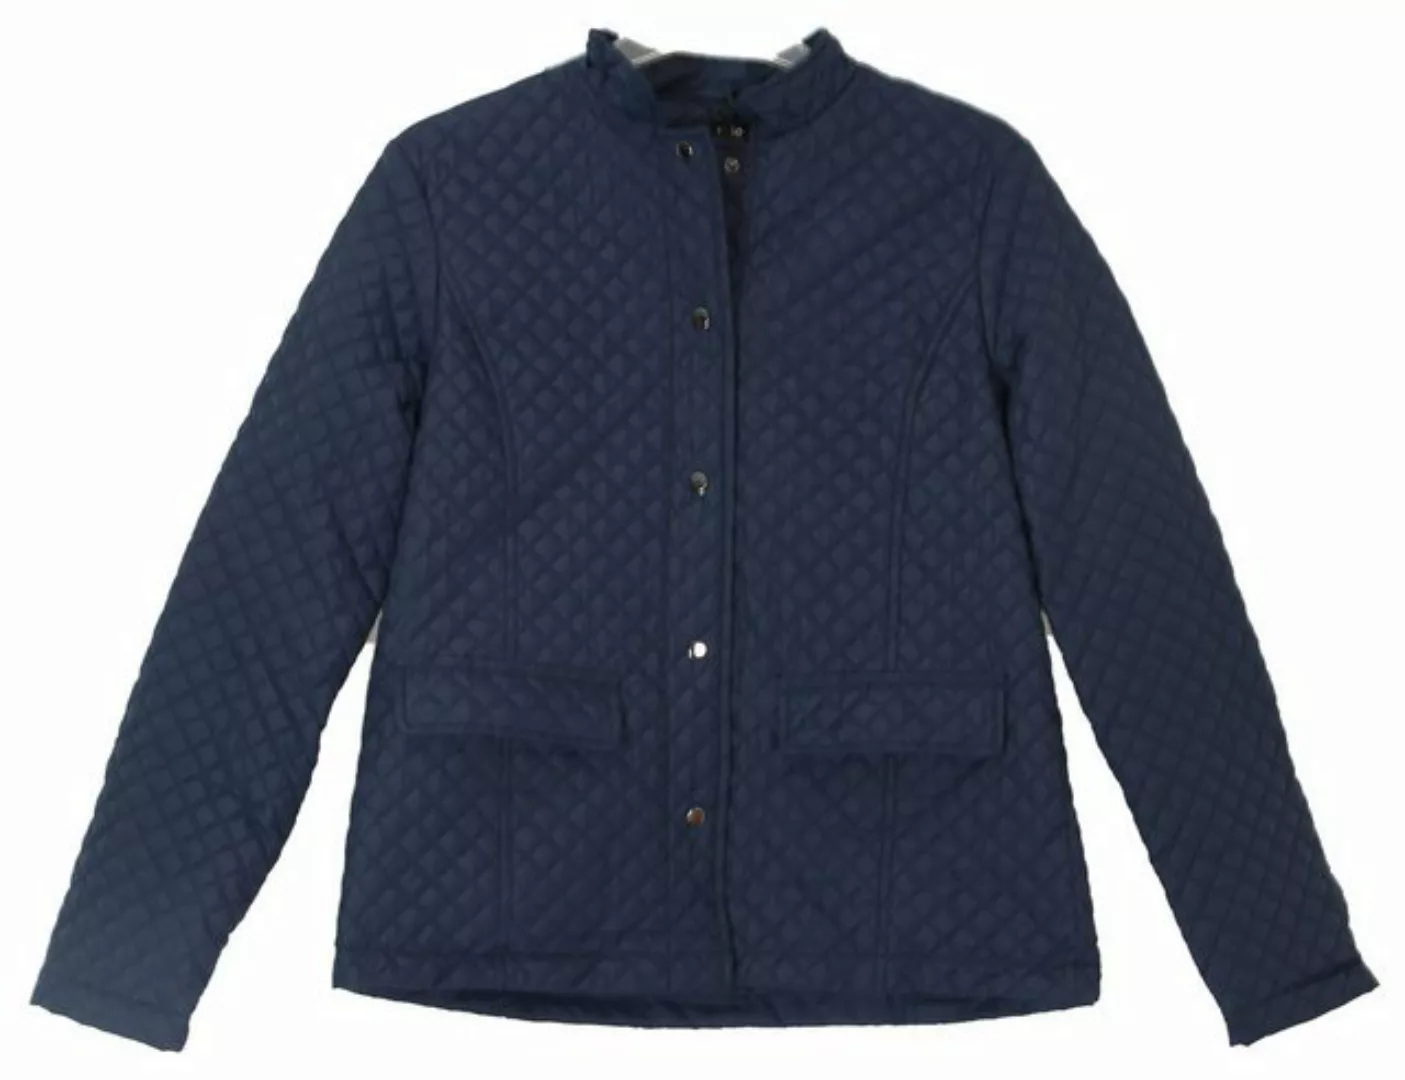 Iwie Steppjacke leichte übergangsjacke gesteppt Karo Muster in Blau günstig online kaufen